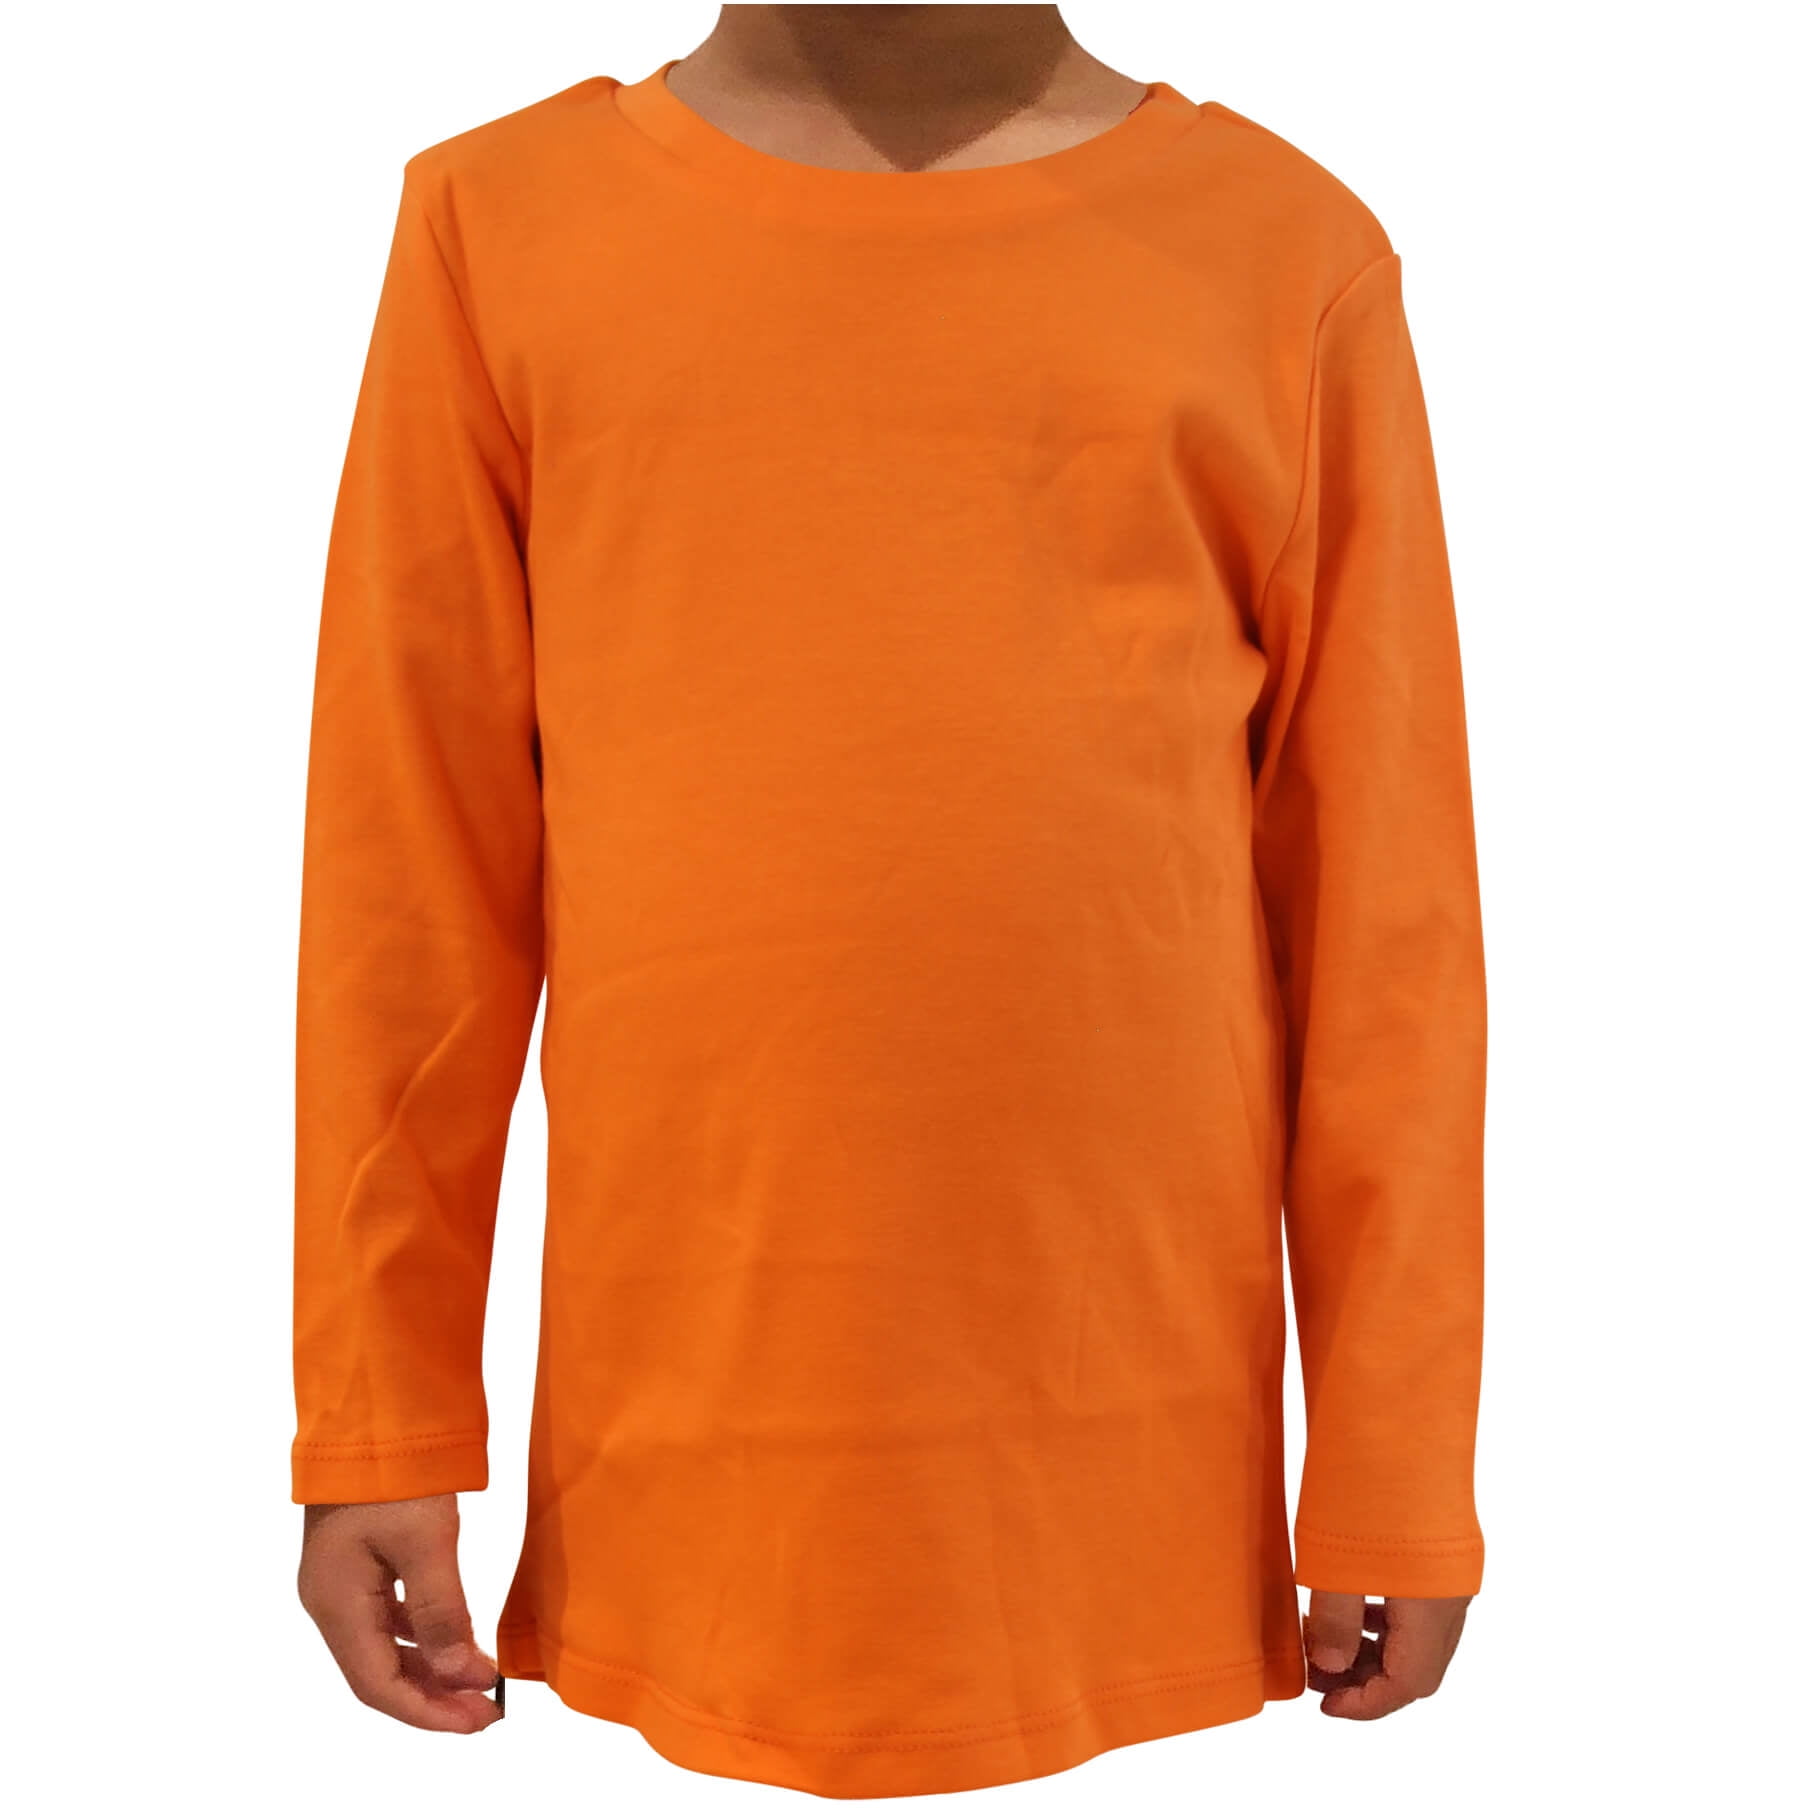 Kids Crew Neck Long Sleeve Plain Color Cotton Shirt, Red/White, 12M, 1 pc.